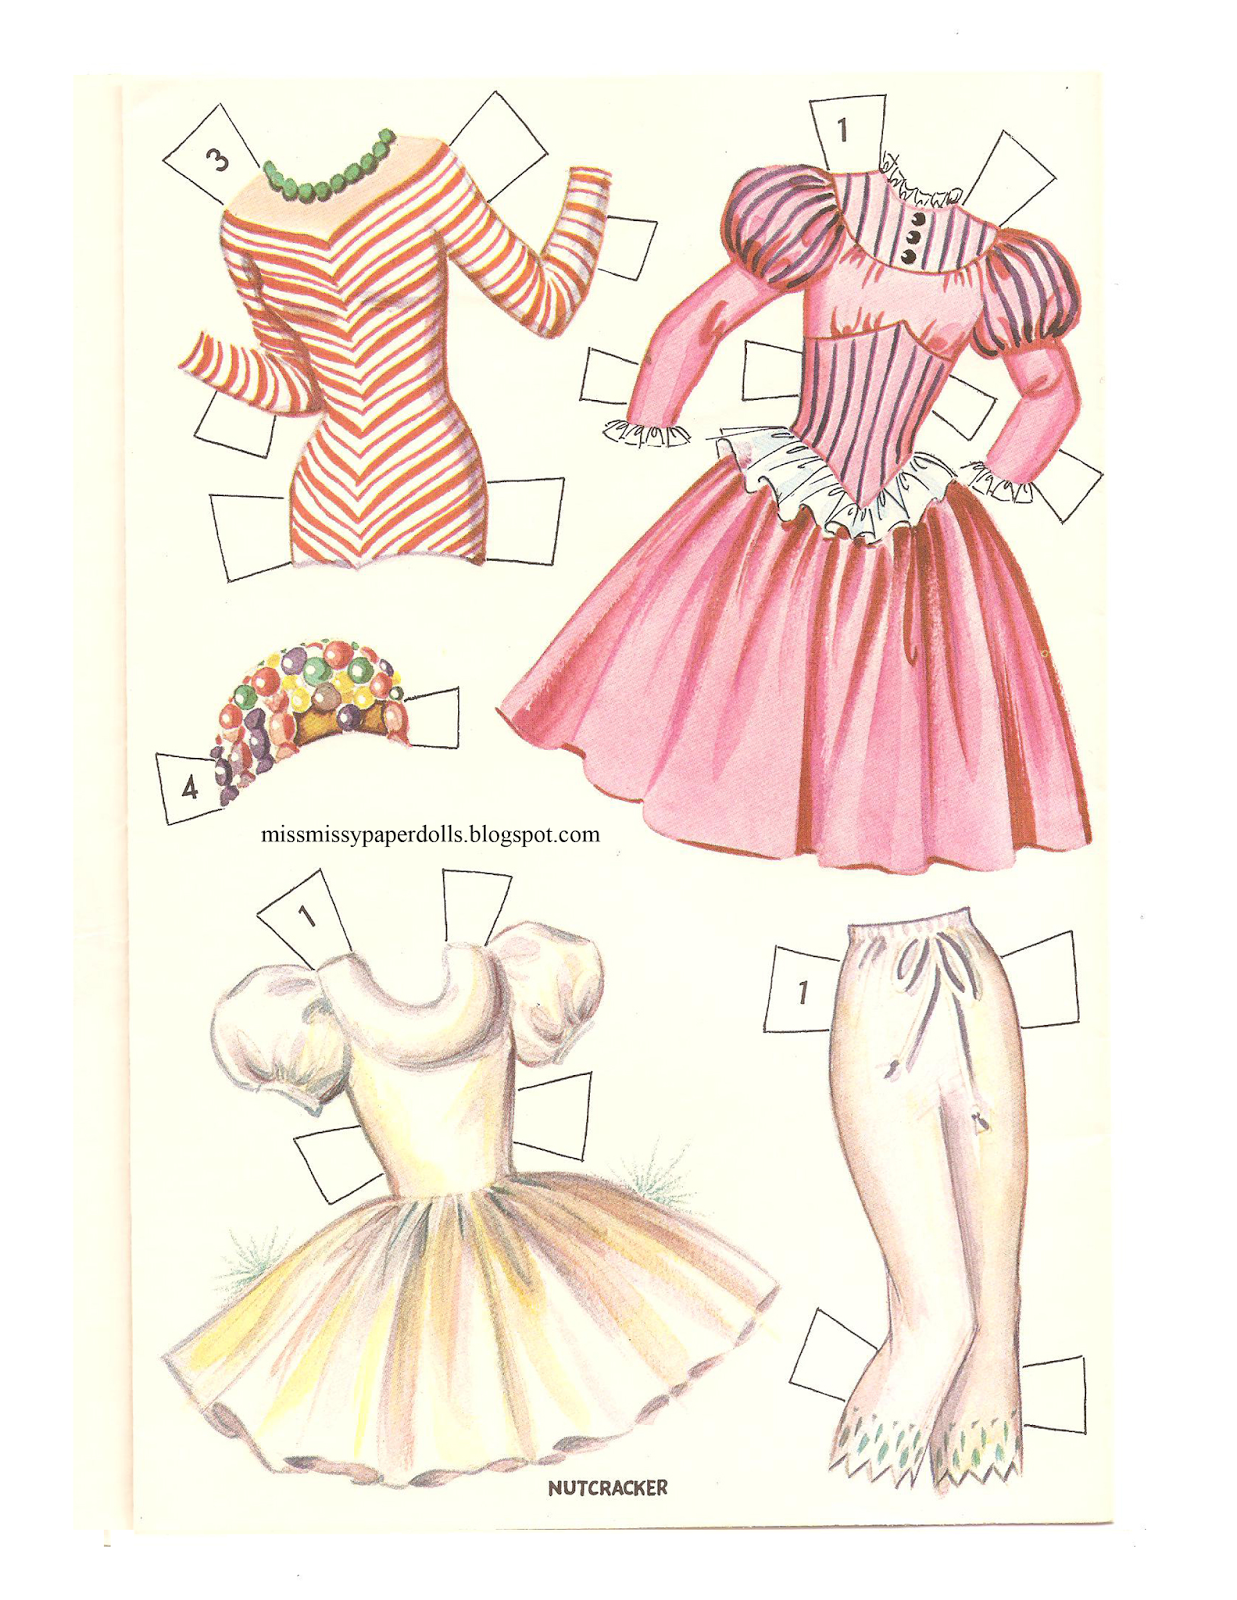 Miss Missy Paper Dolls: The Nutcracker Ballet cutouts